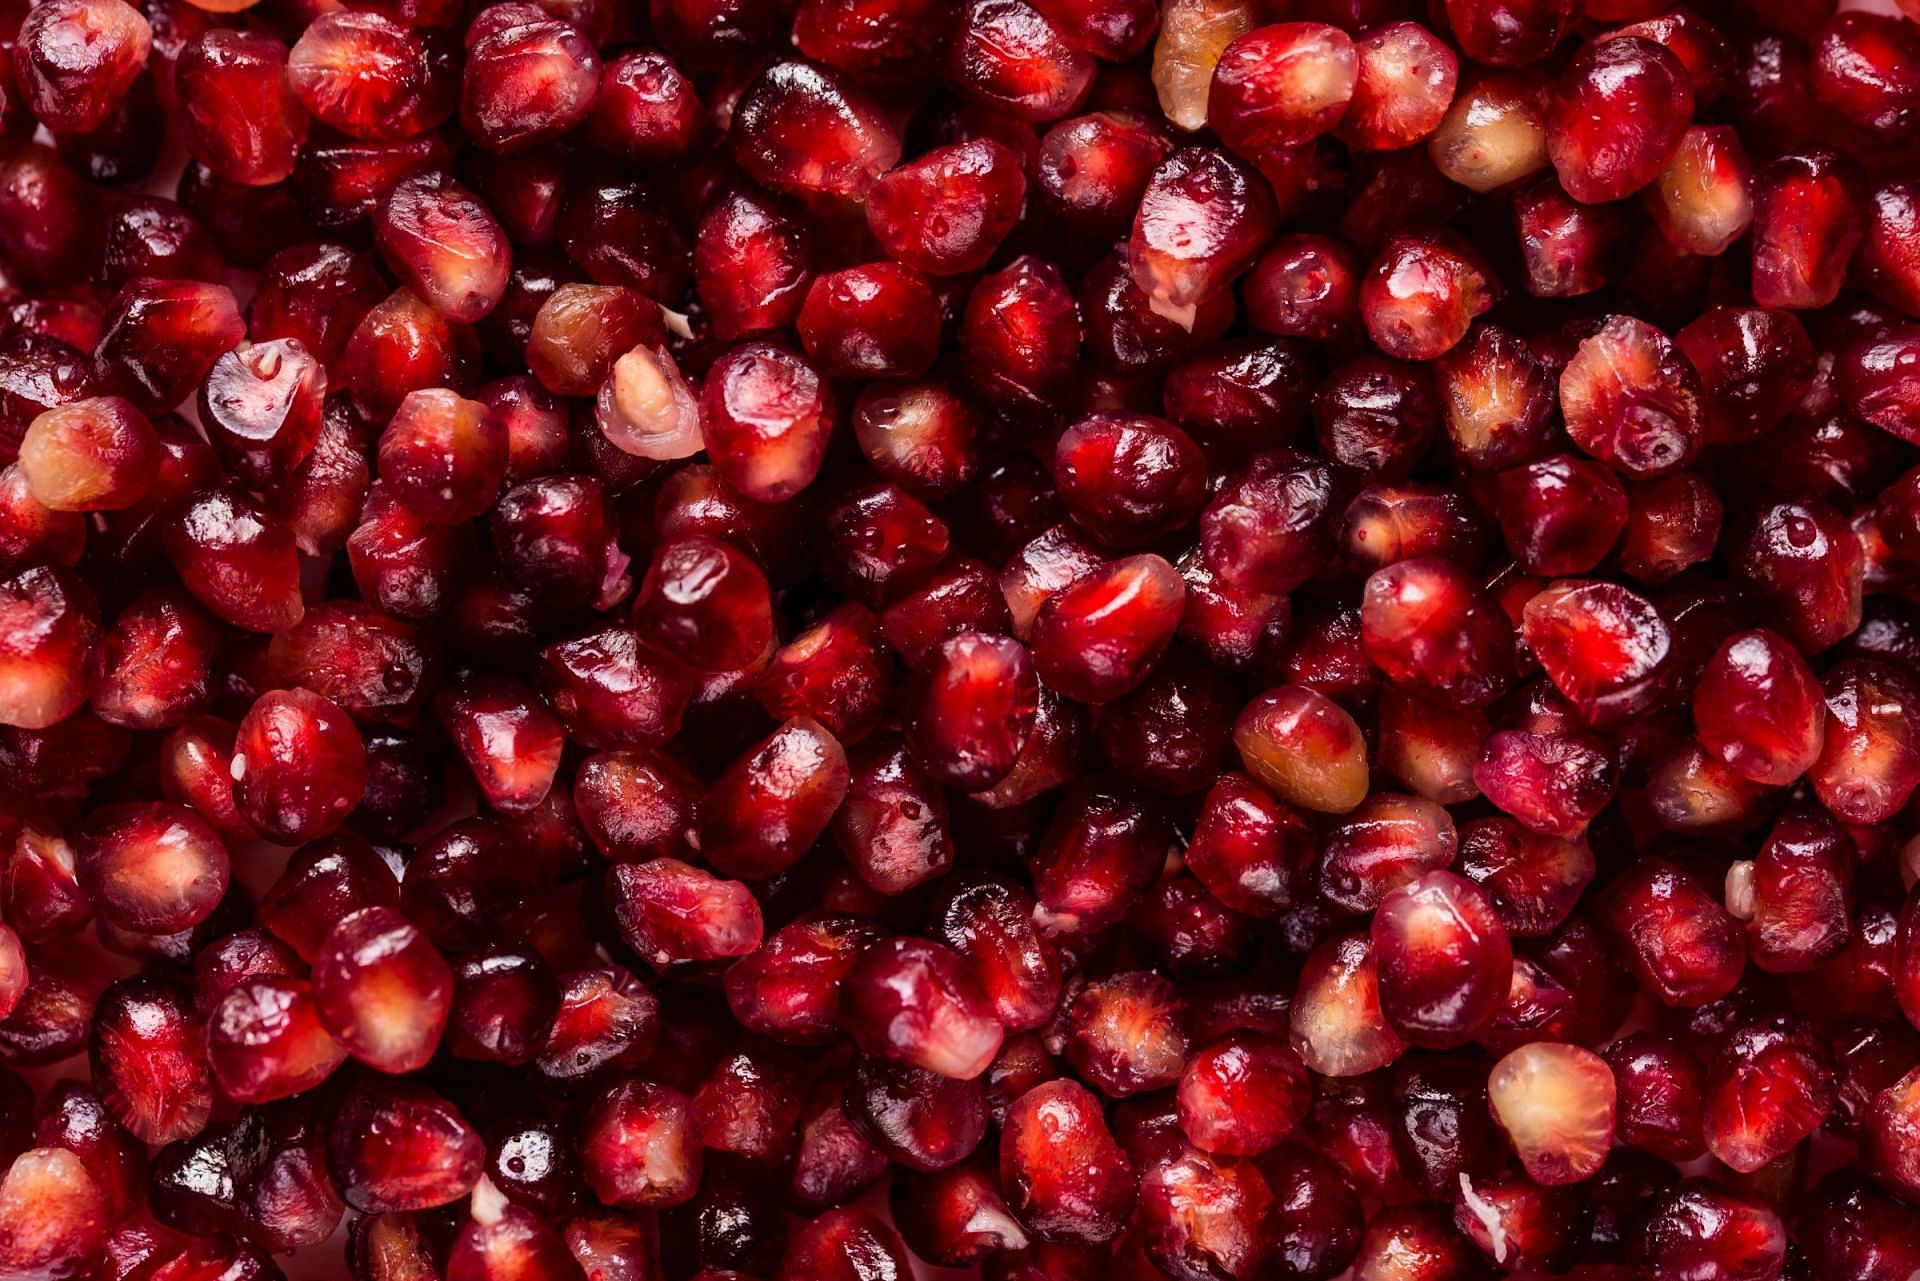 Pomegranate benefits for skin (Image via Unsplash/Joanna Kosinska)